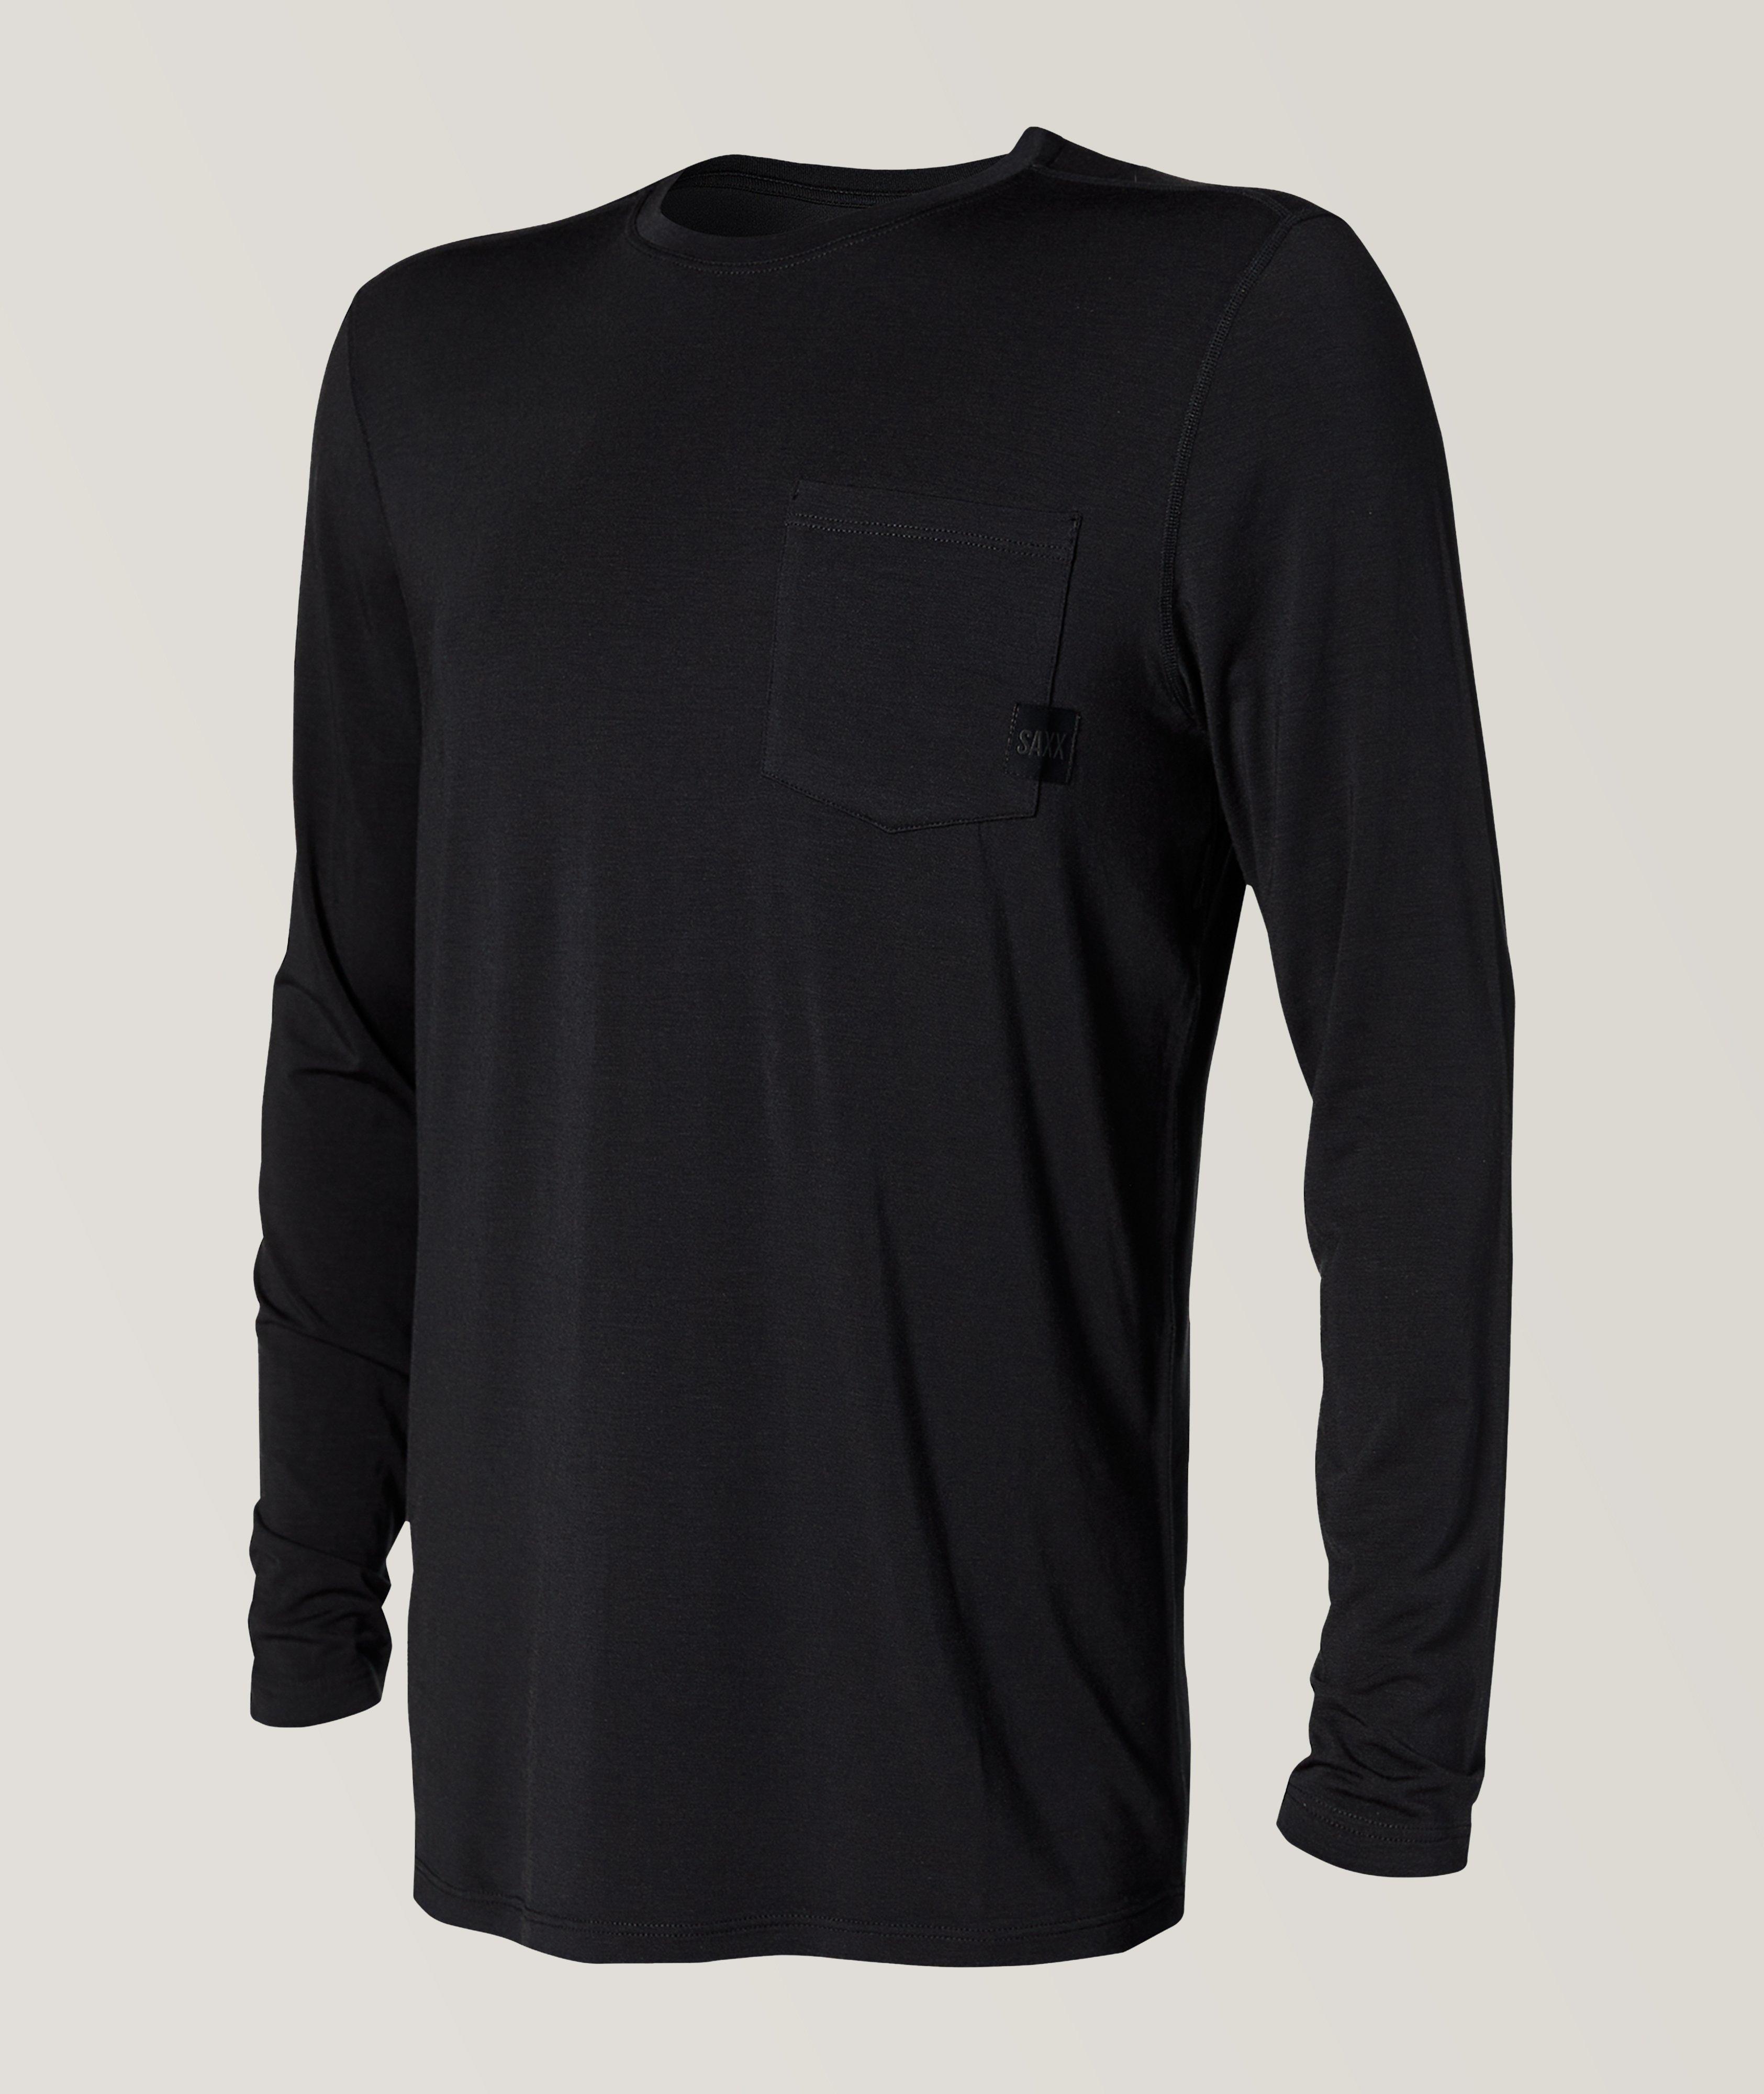 Long-Sleeve Sleepwalker Stretch-Modal T-Shirt image 0